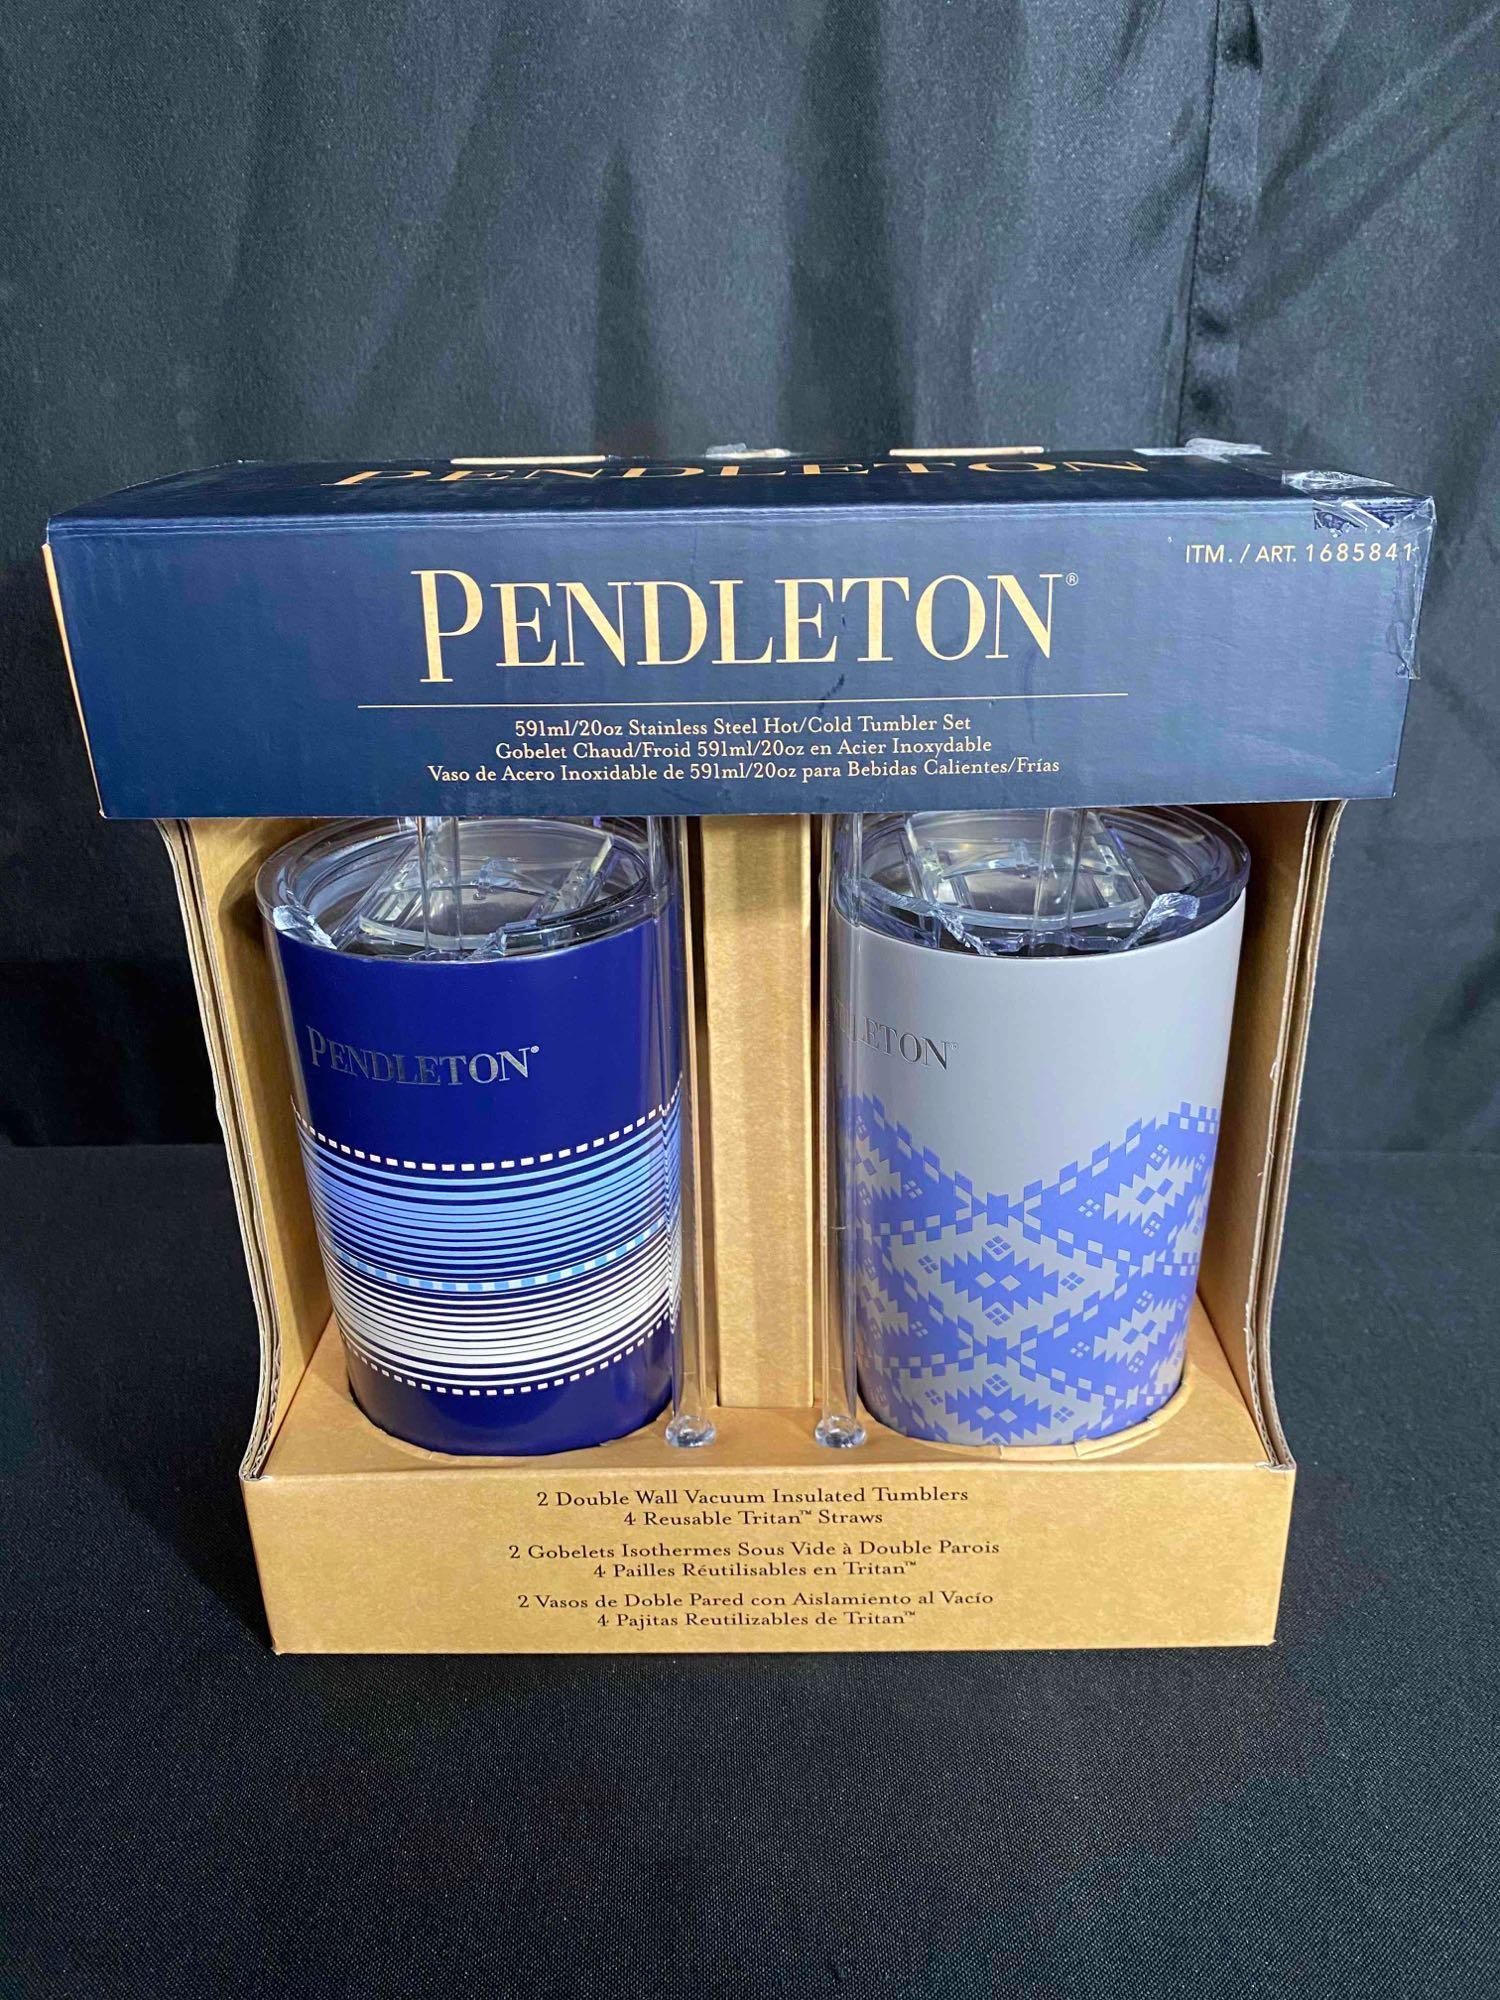 Pendleton Patterned 20oz Stainless Steel Hot/Cold Tumbler Set (Blue & Gray)